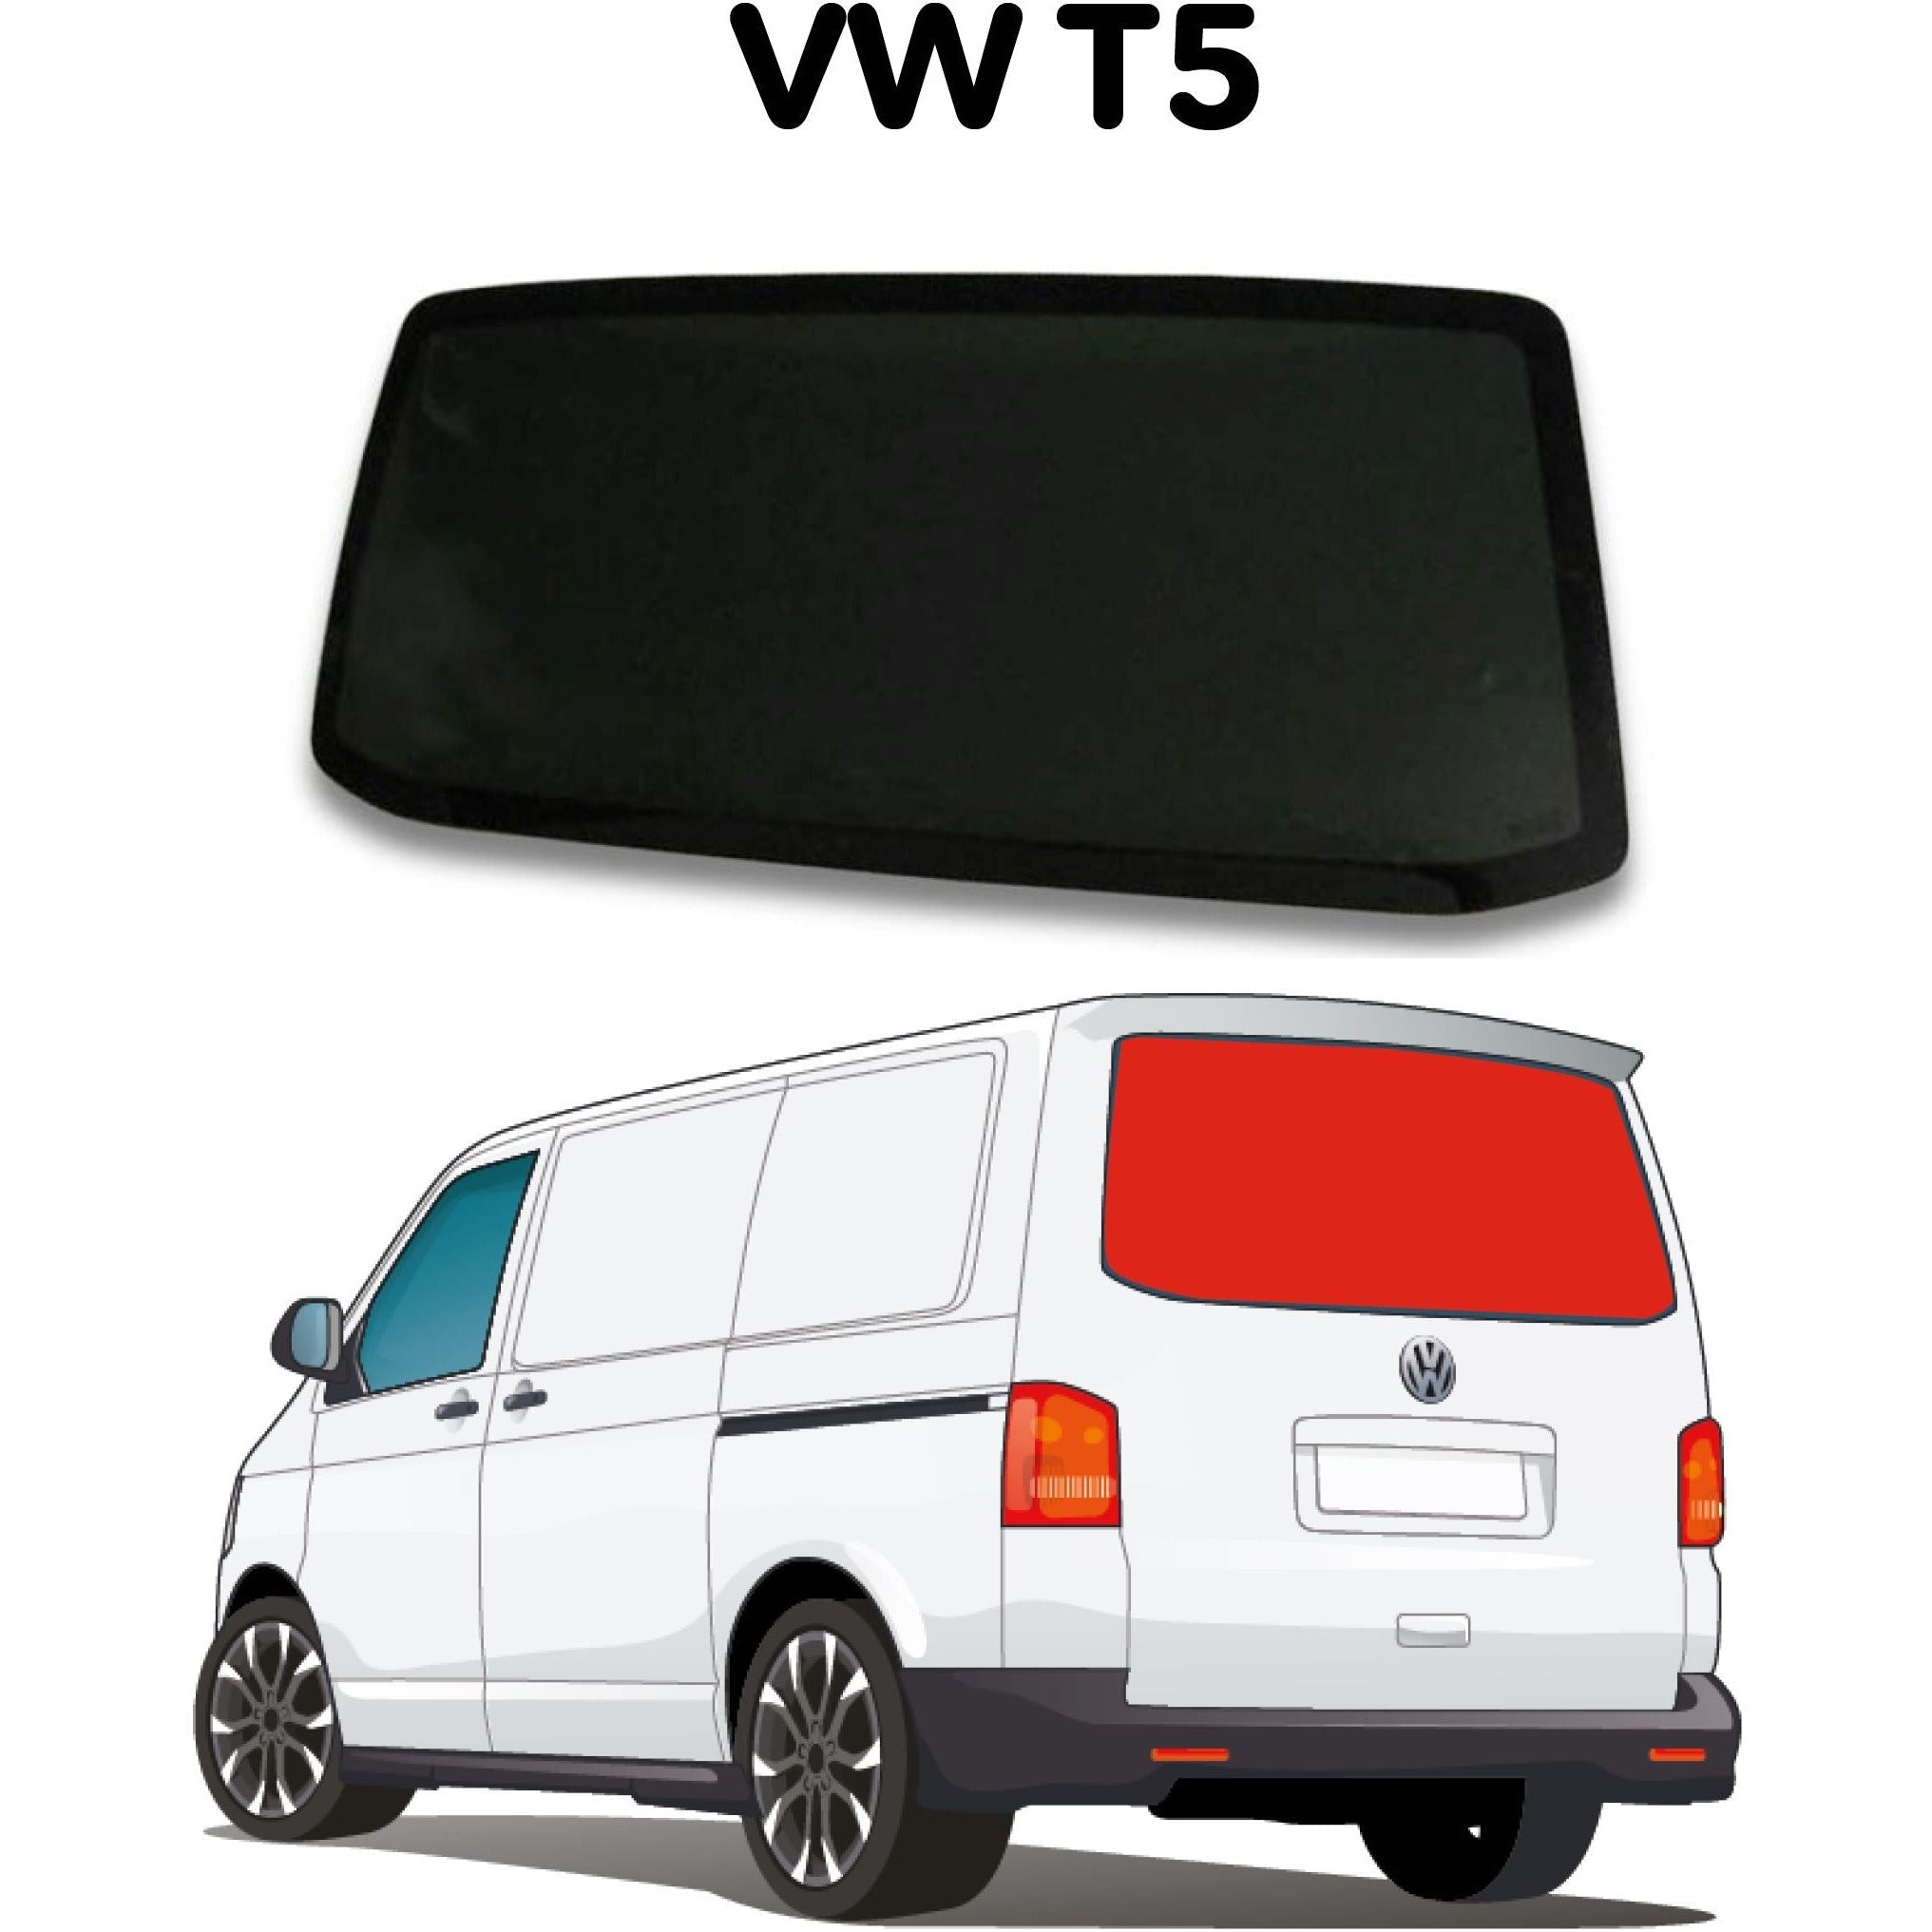 Tailgate Campervan Window VW T5 Camper Glass by Kiravans 